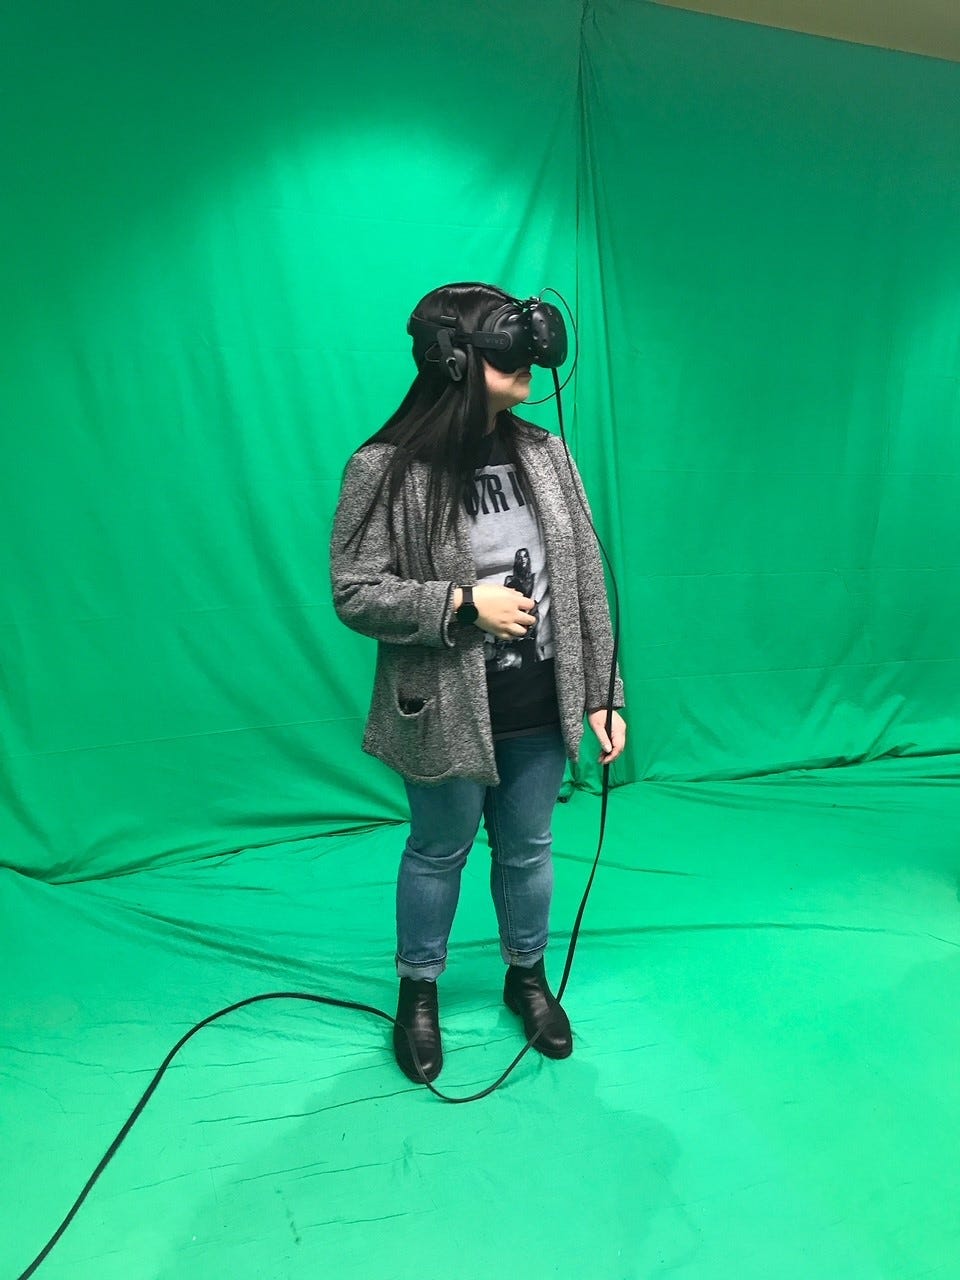 Photo: Patiño-Liu testing VR games for the program
Credit: Patiño-Liu